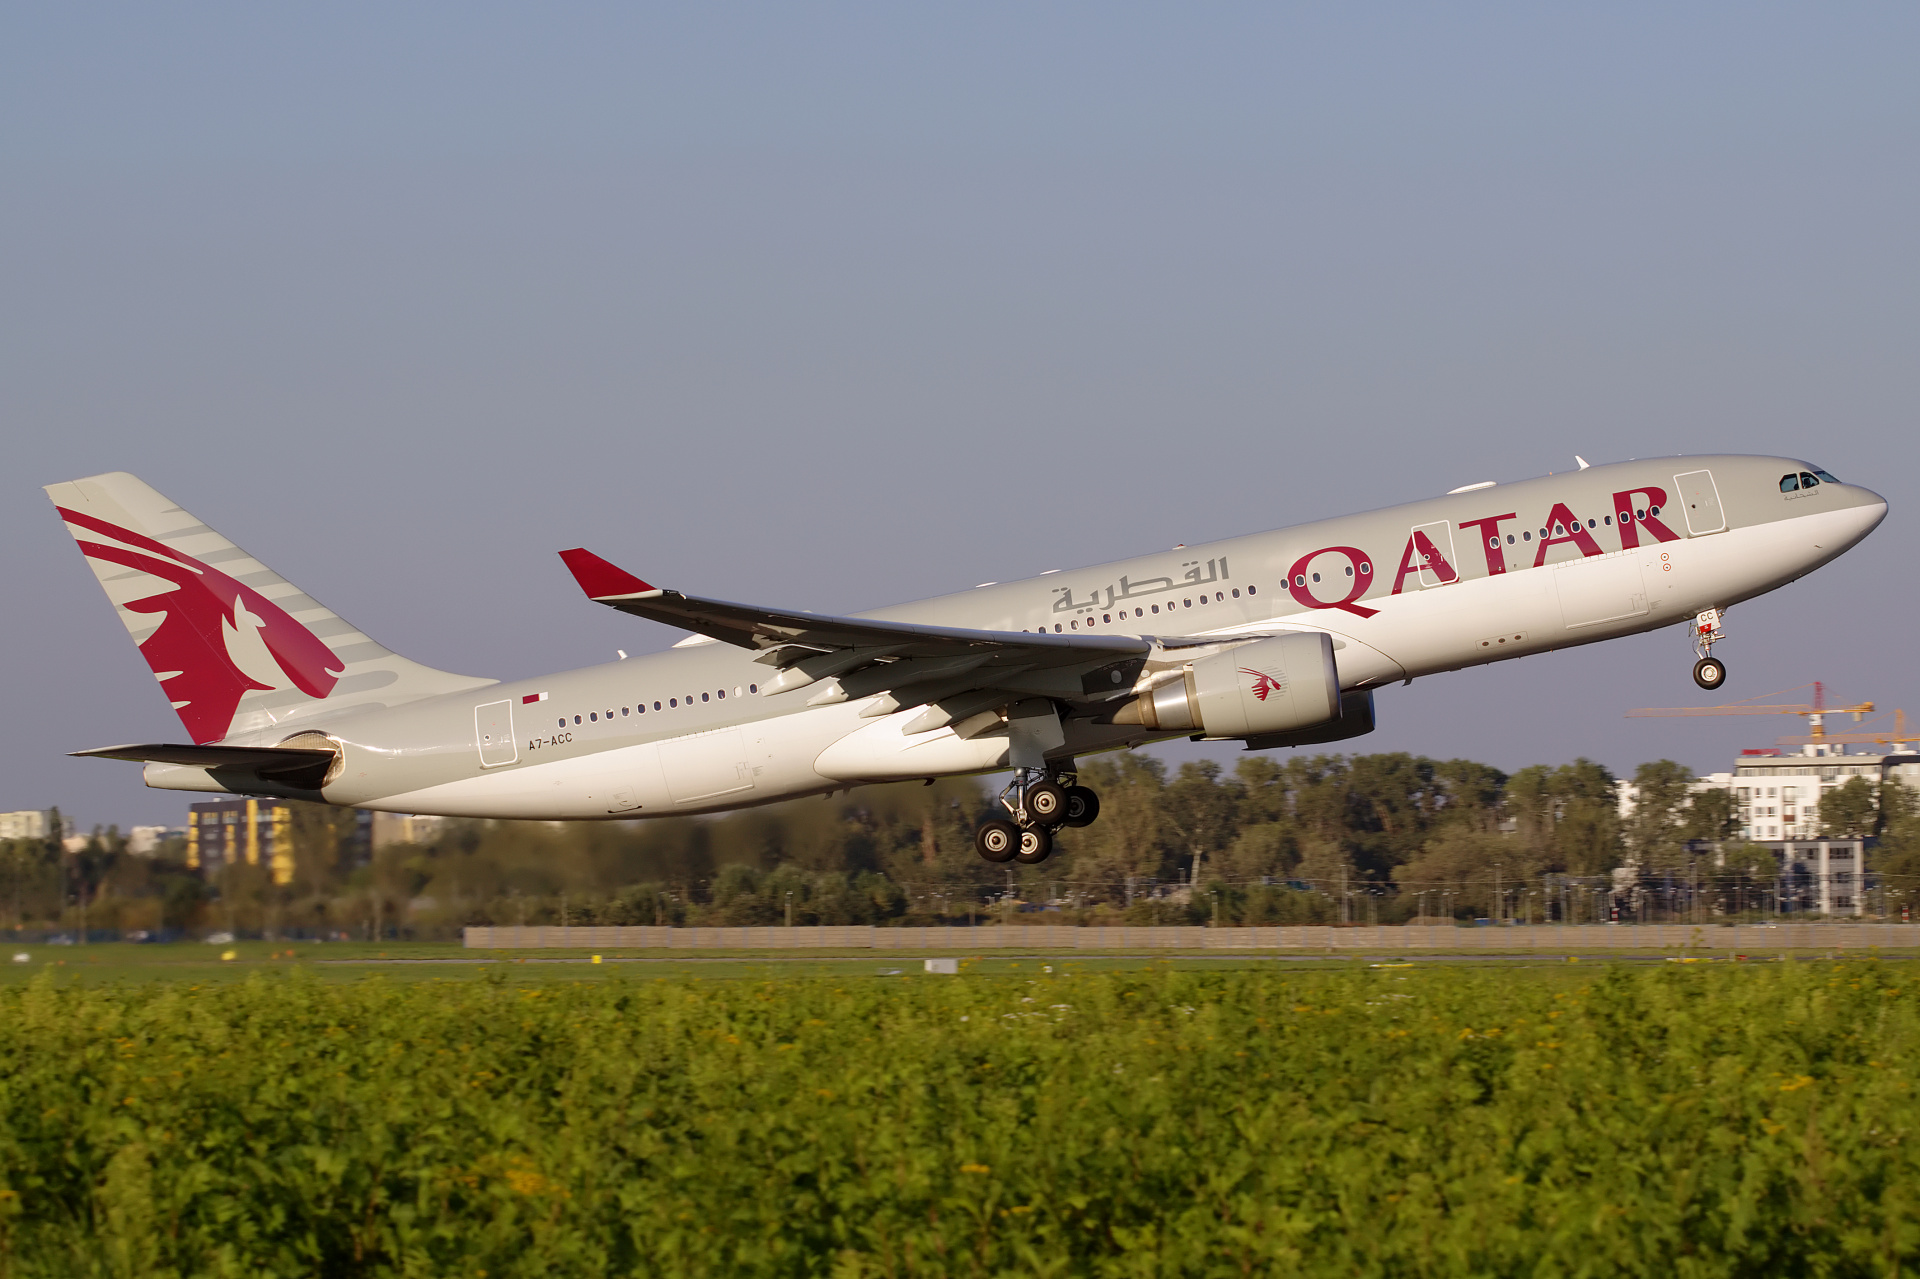 A7-ACC (Aircraft » EPWA Spotting » Airbus A330-200 » Qatar Airways)